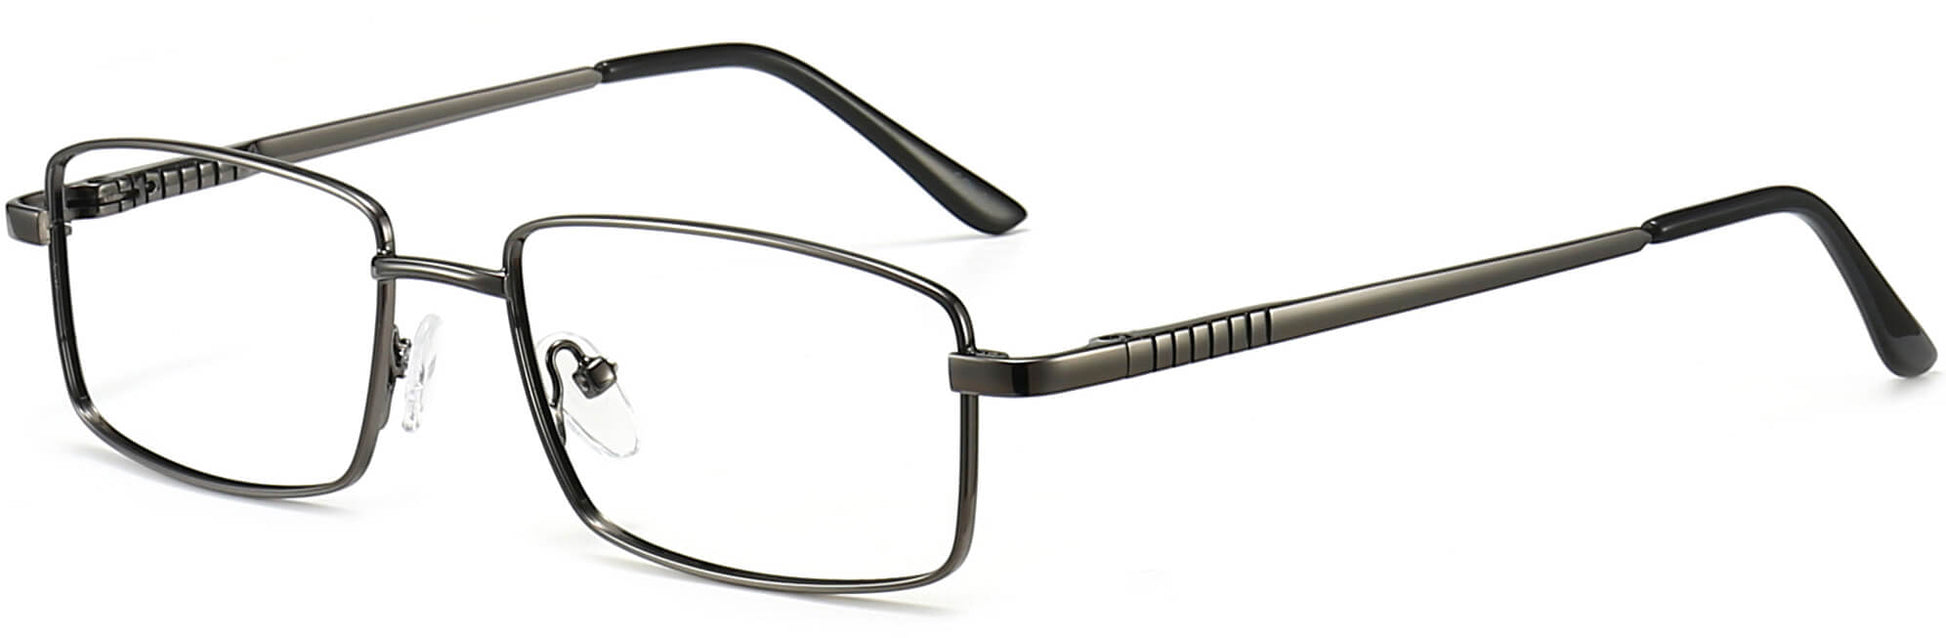 Nikolai Rectangle Gun Color Eyeglasses from ANRRI, angle view